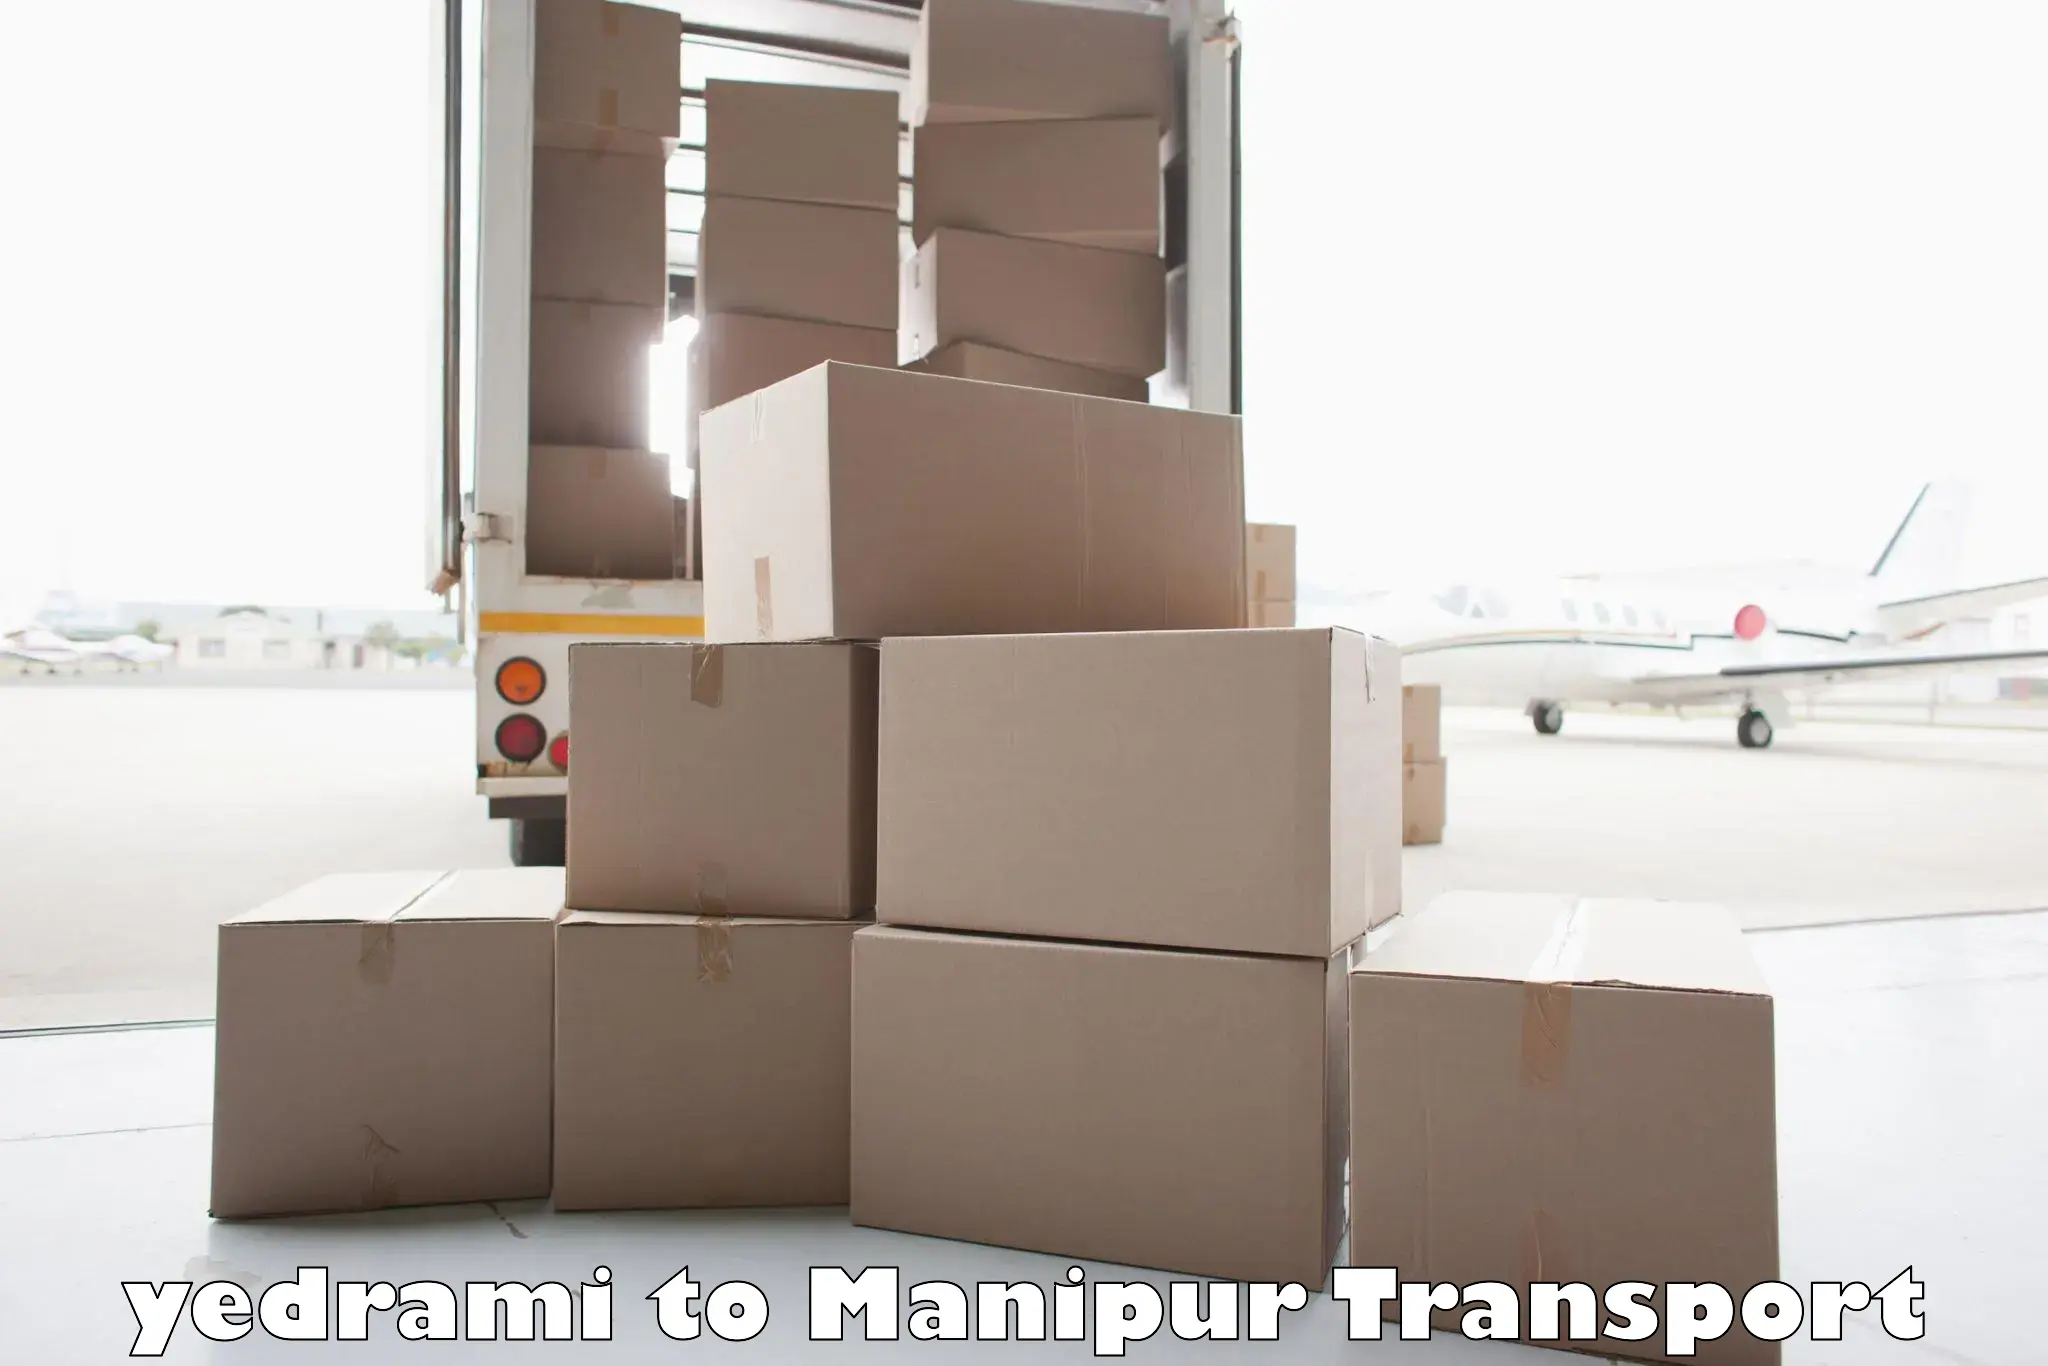 Transport in sharing yedrami to Manipur